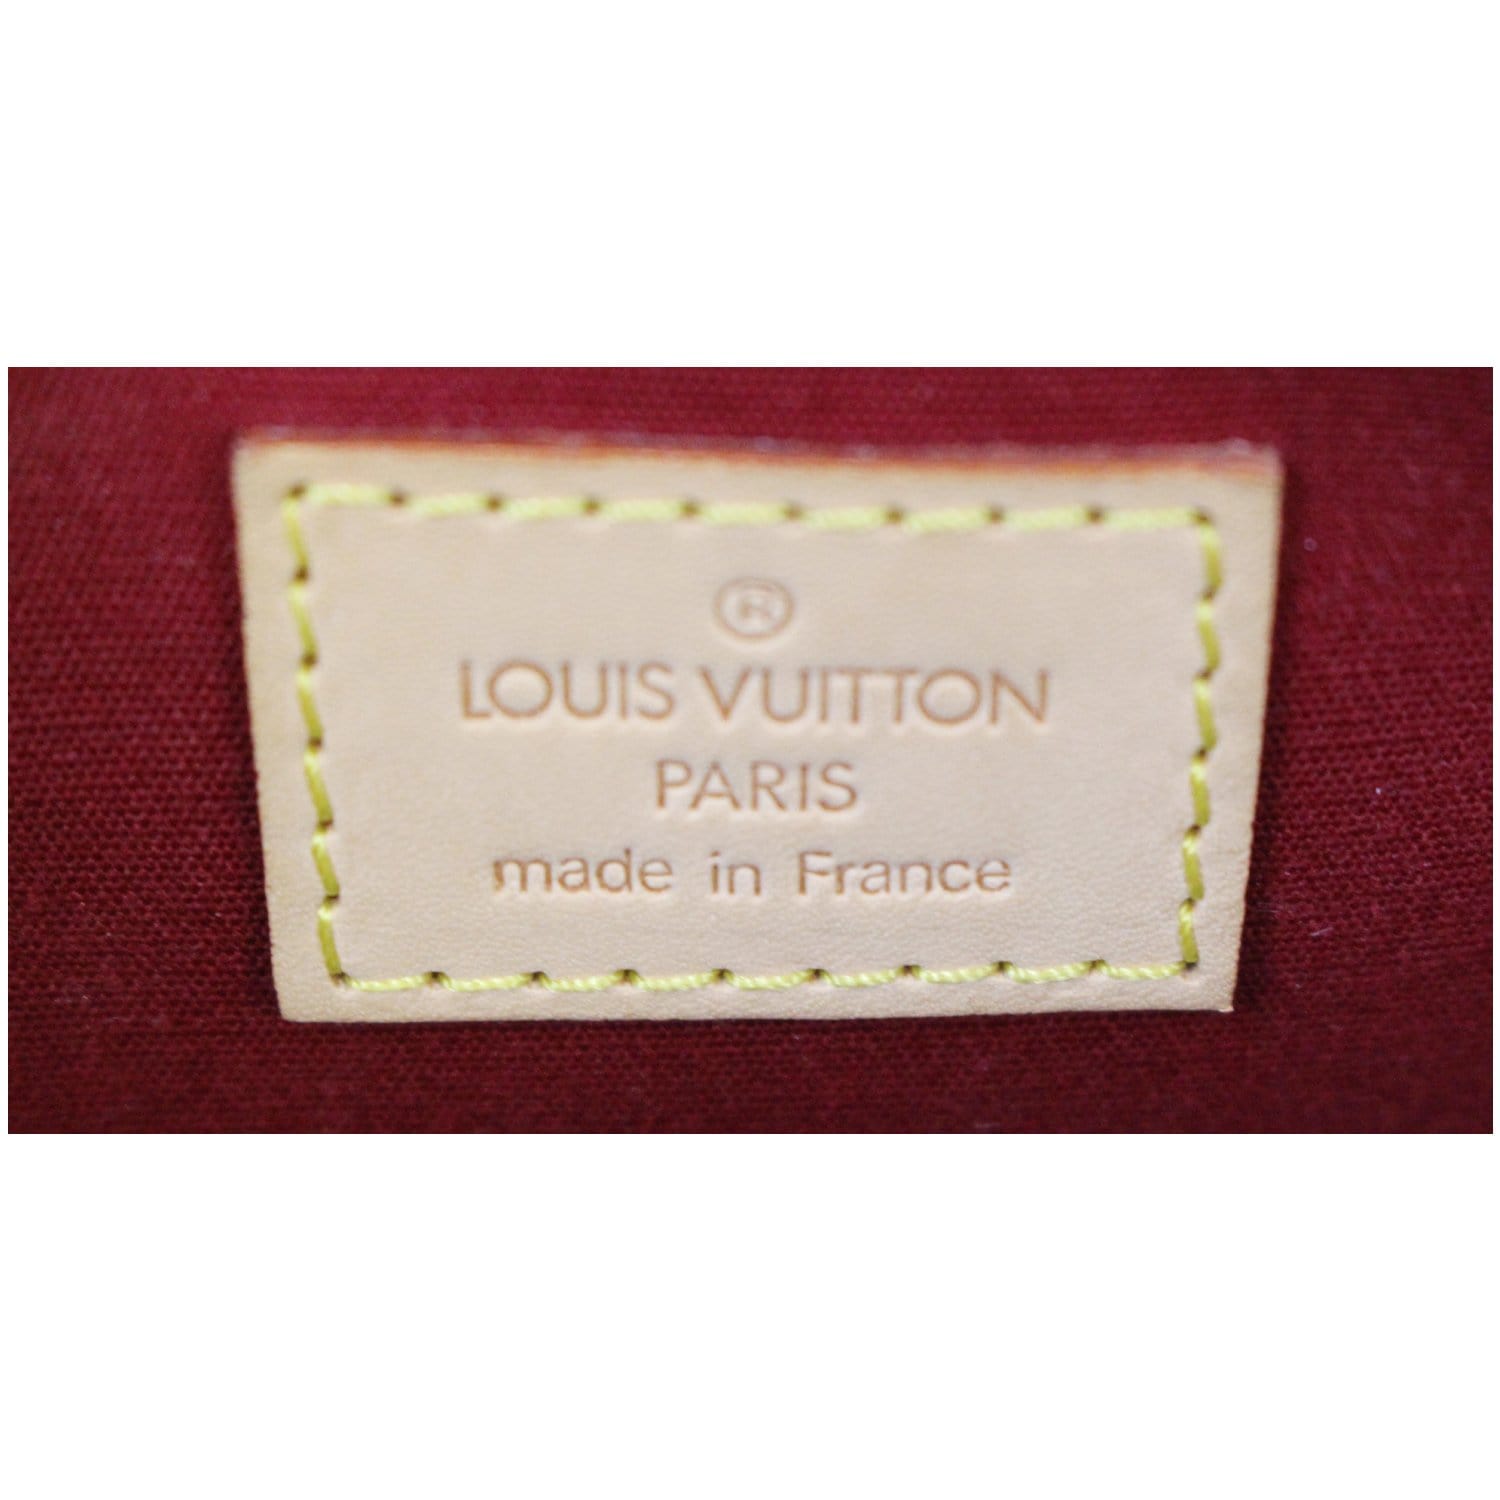 Louis Vuitton, Bags, Louis Vuitton Vernis Bellevue Pm Tote In Amaretto